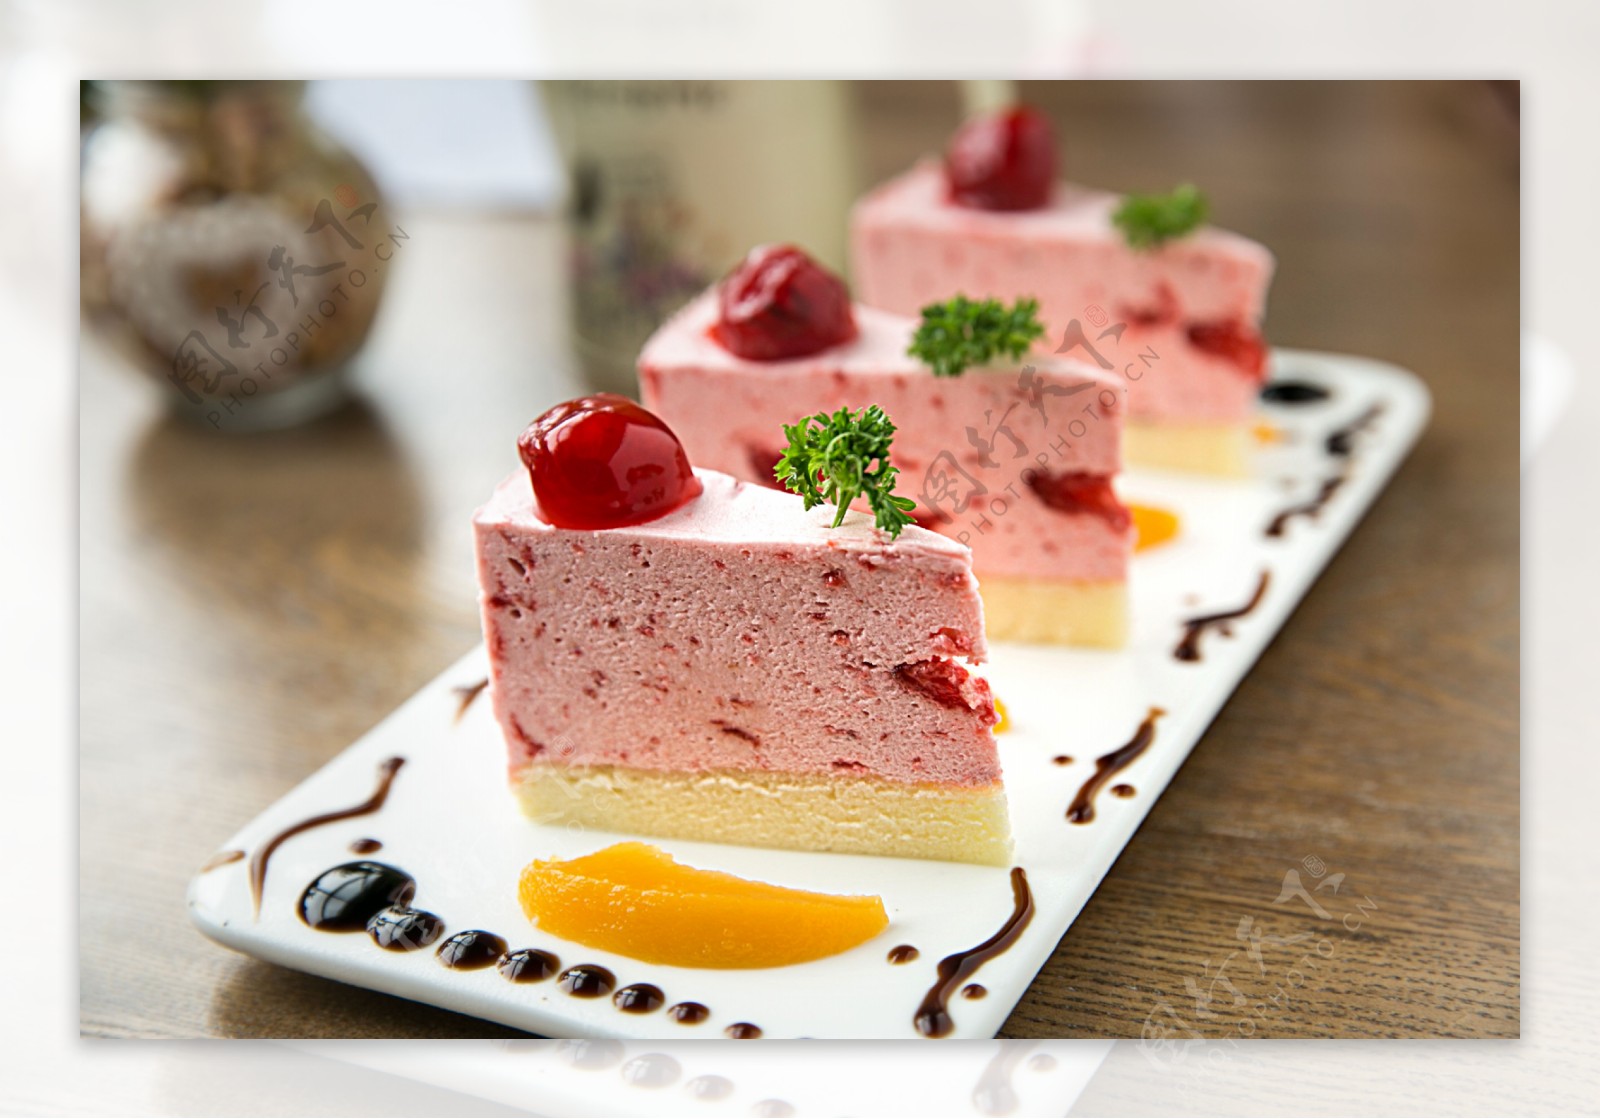 Ewei's Passion: 奧利奧草莓乳酪慕斯蛋糕 Oreo Strawberry Cream Cheese Mousse Cake